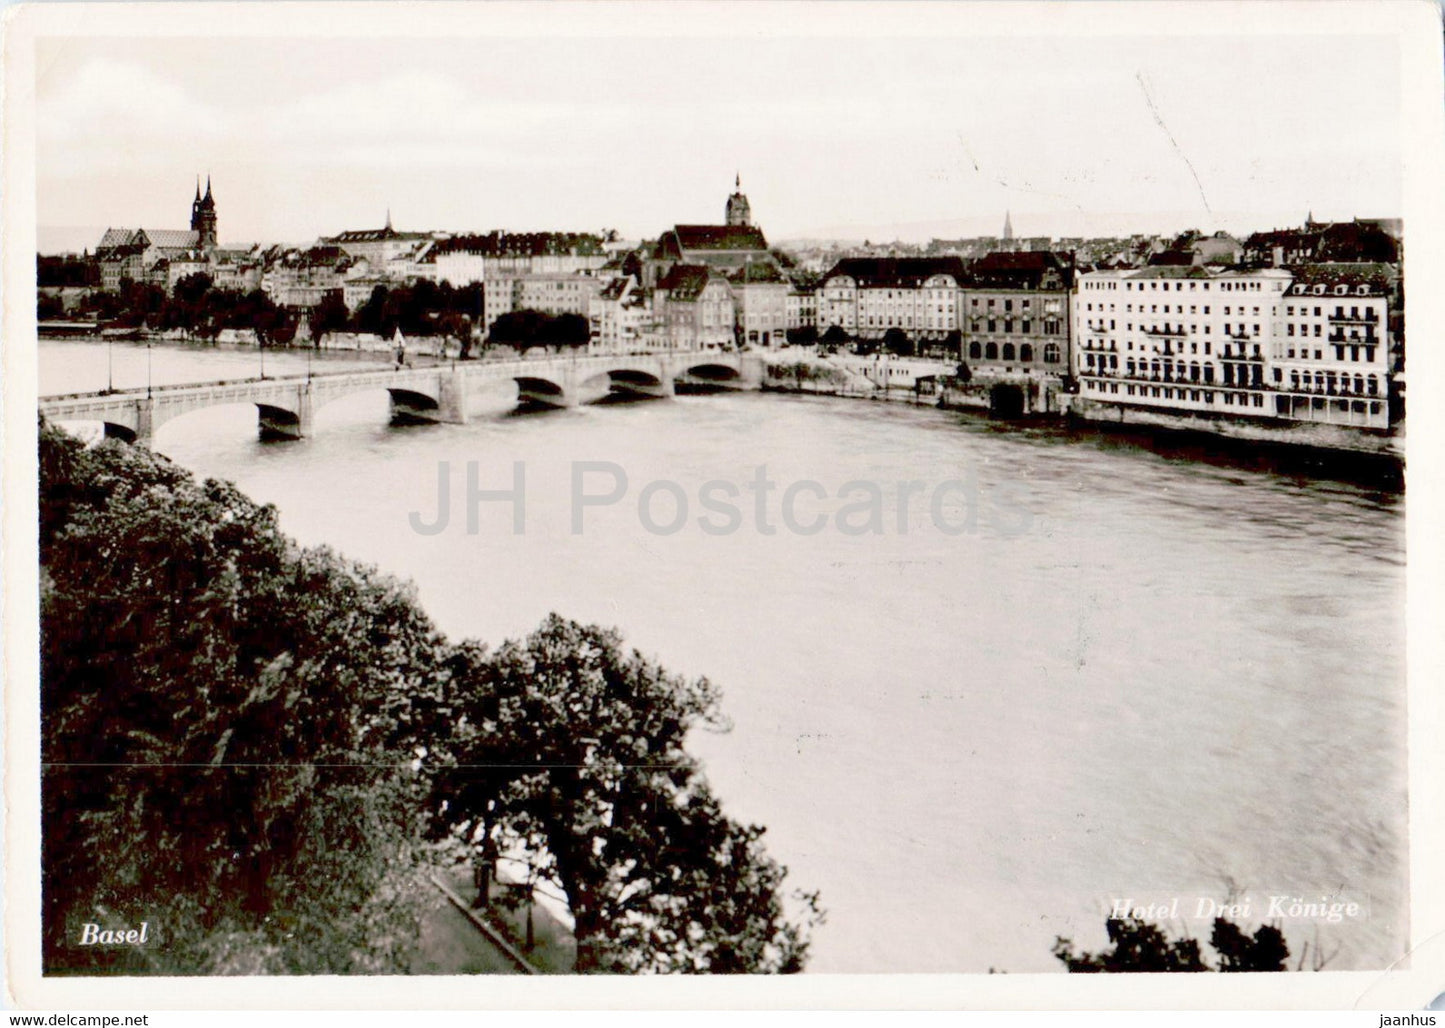 Basel - Hotel Drei Konige - bridge - 547 - old postcard - Switzerland - used - JH Postcards